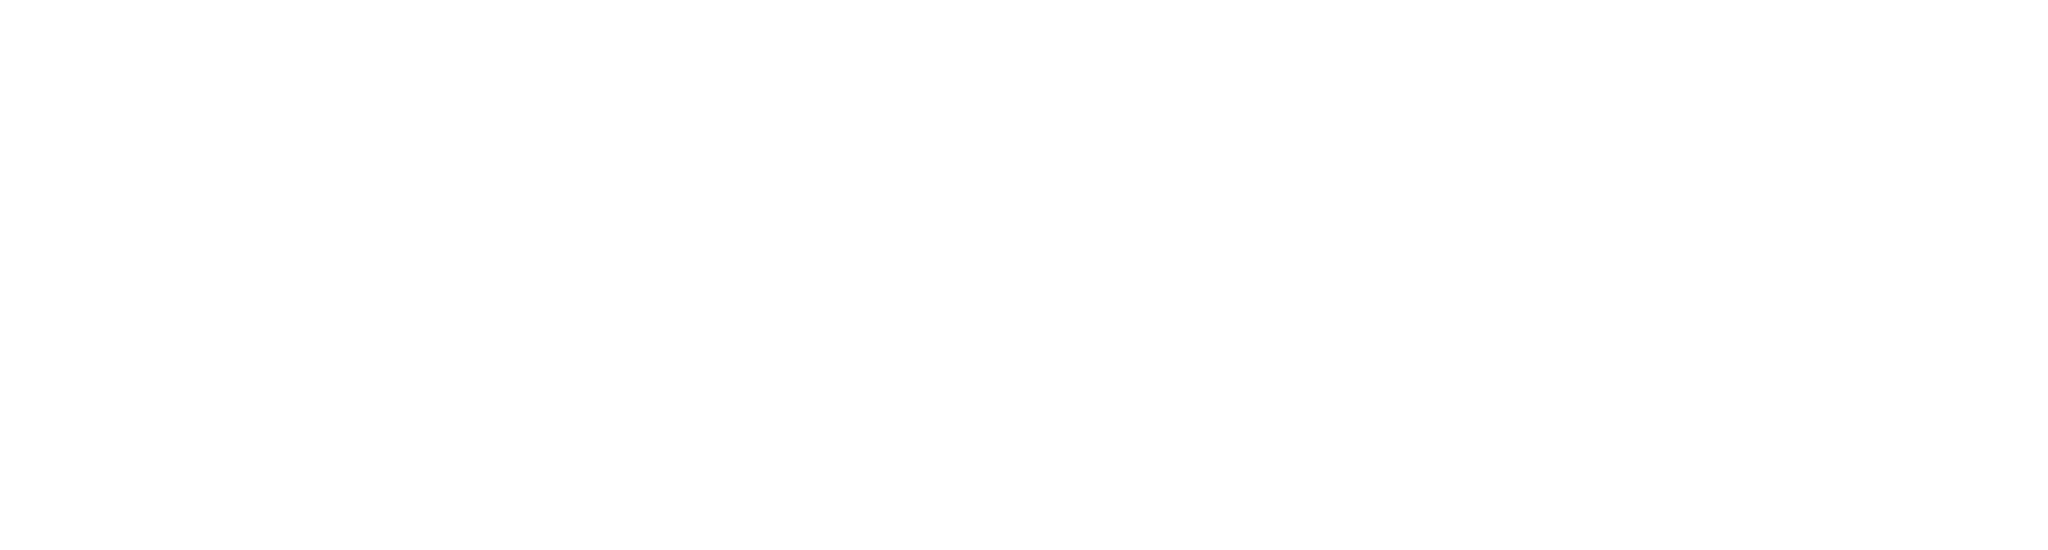 Logo of ledair